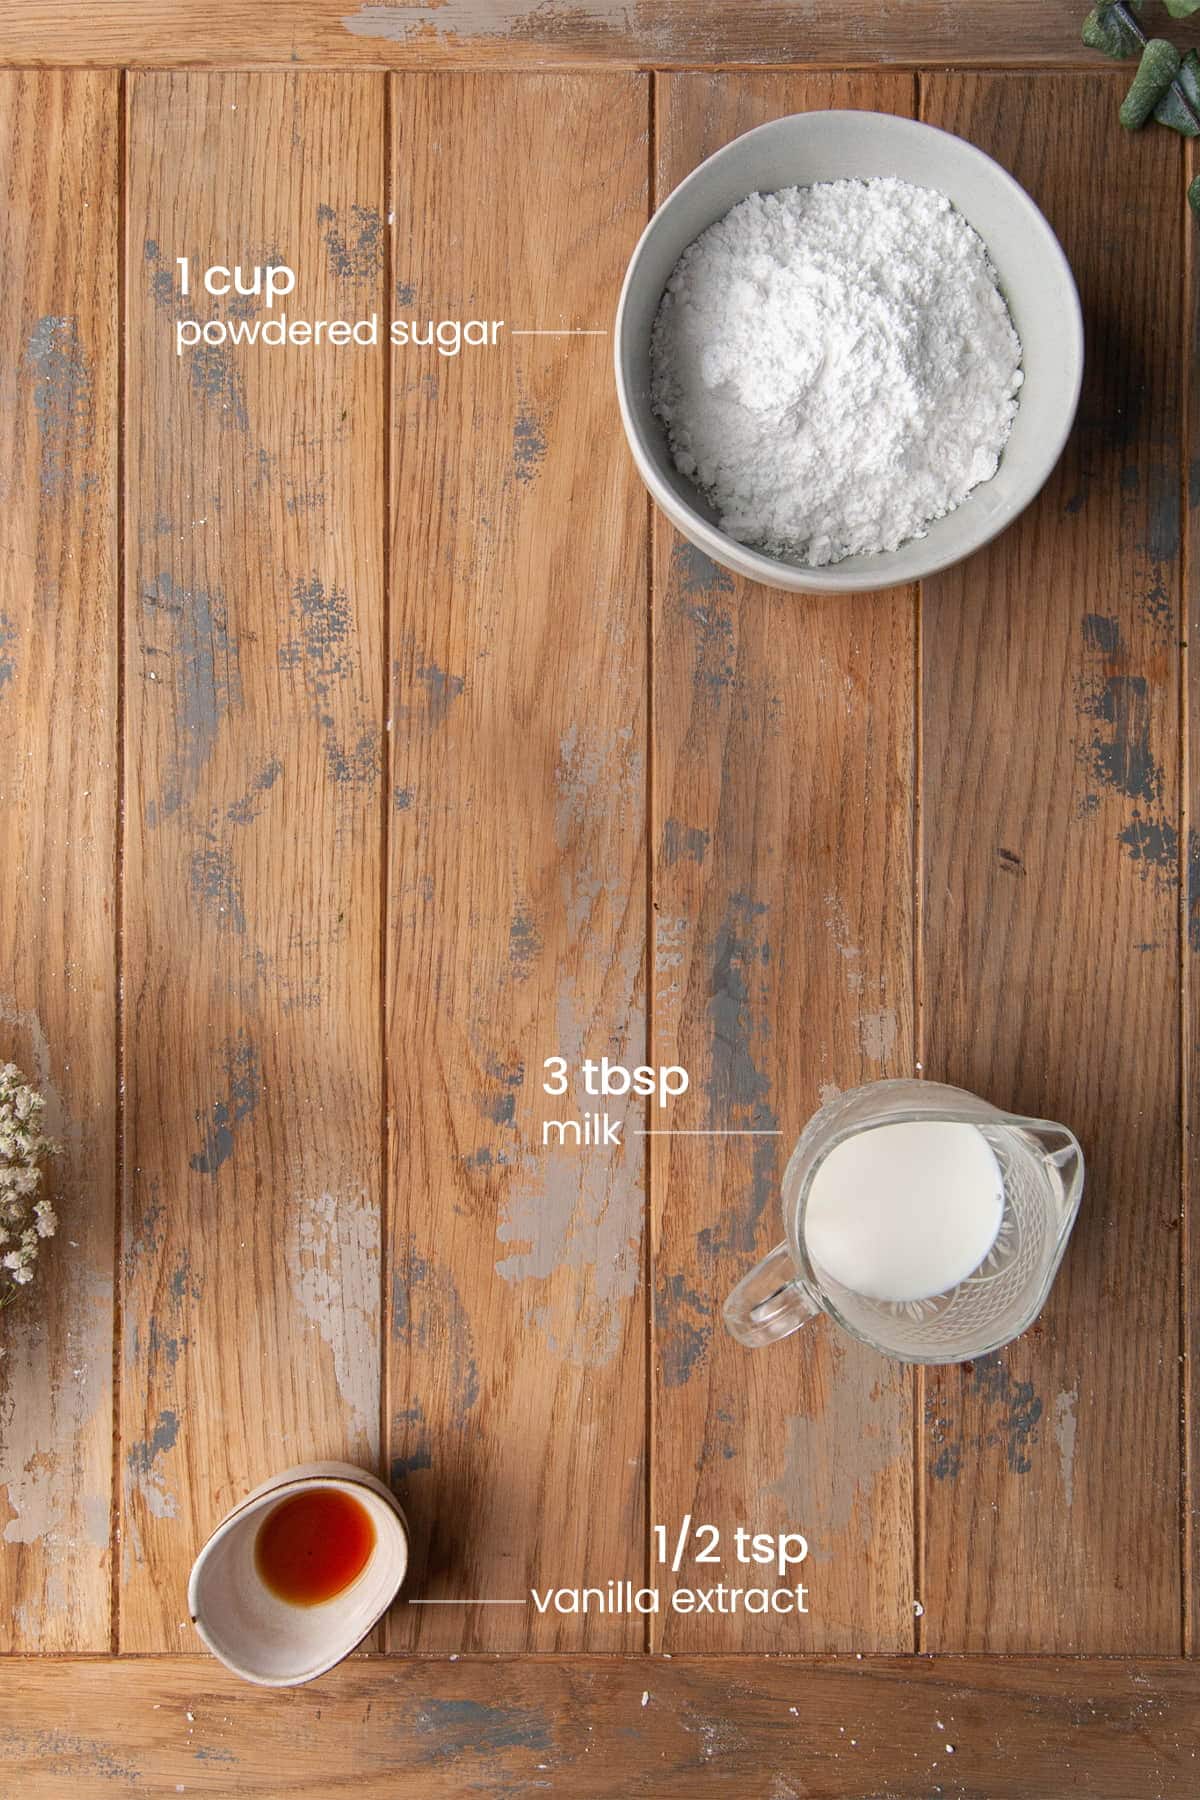 Cinnamon rolls with apple pie filling - powdered sugar, milk, and vanilla extract